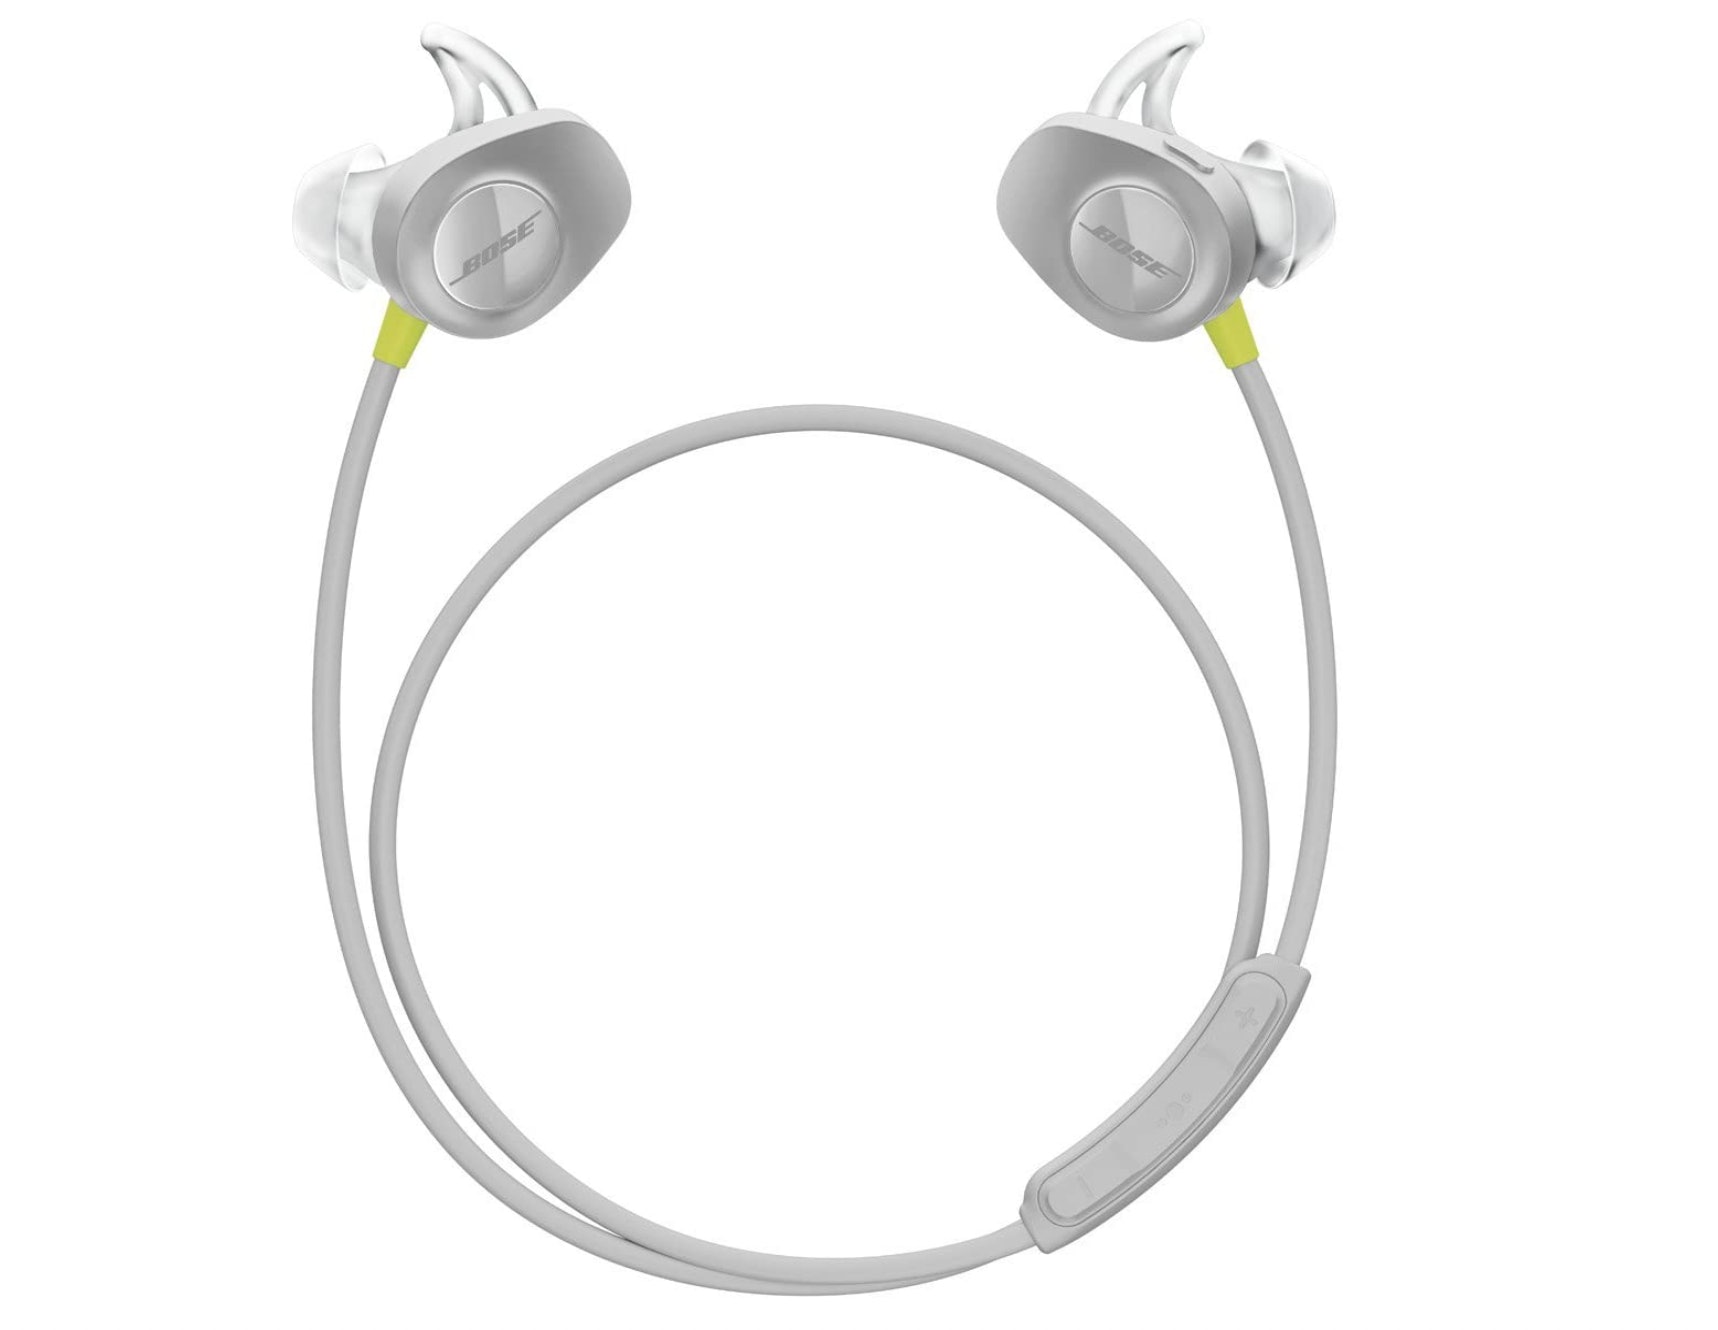 pokretač Golub srednji  4 najbolje slušalice s trakom za vrat - Život